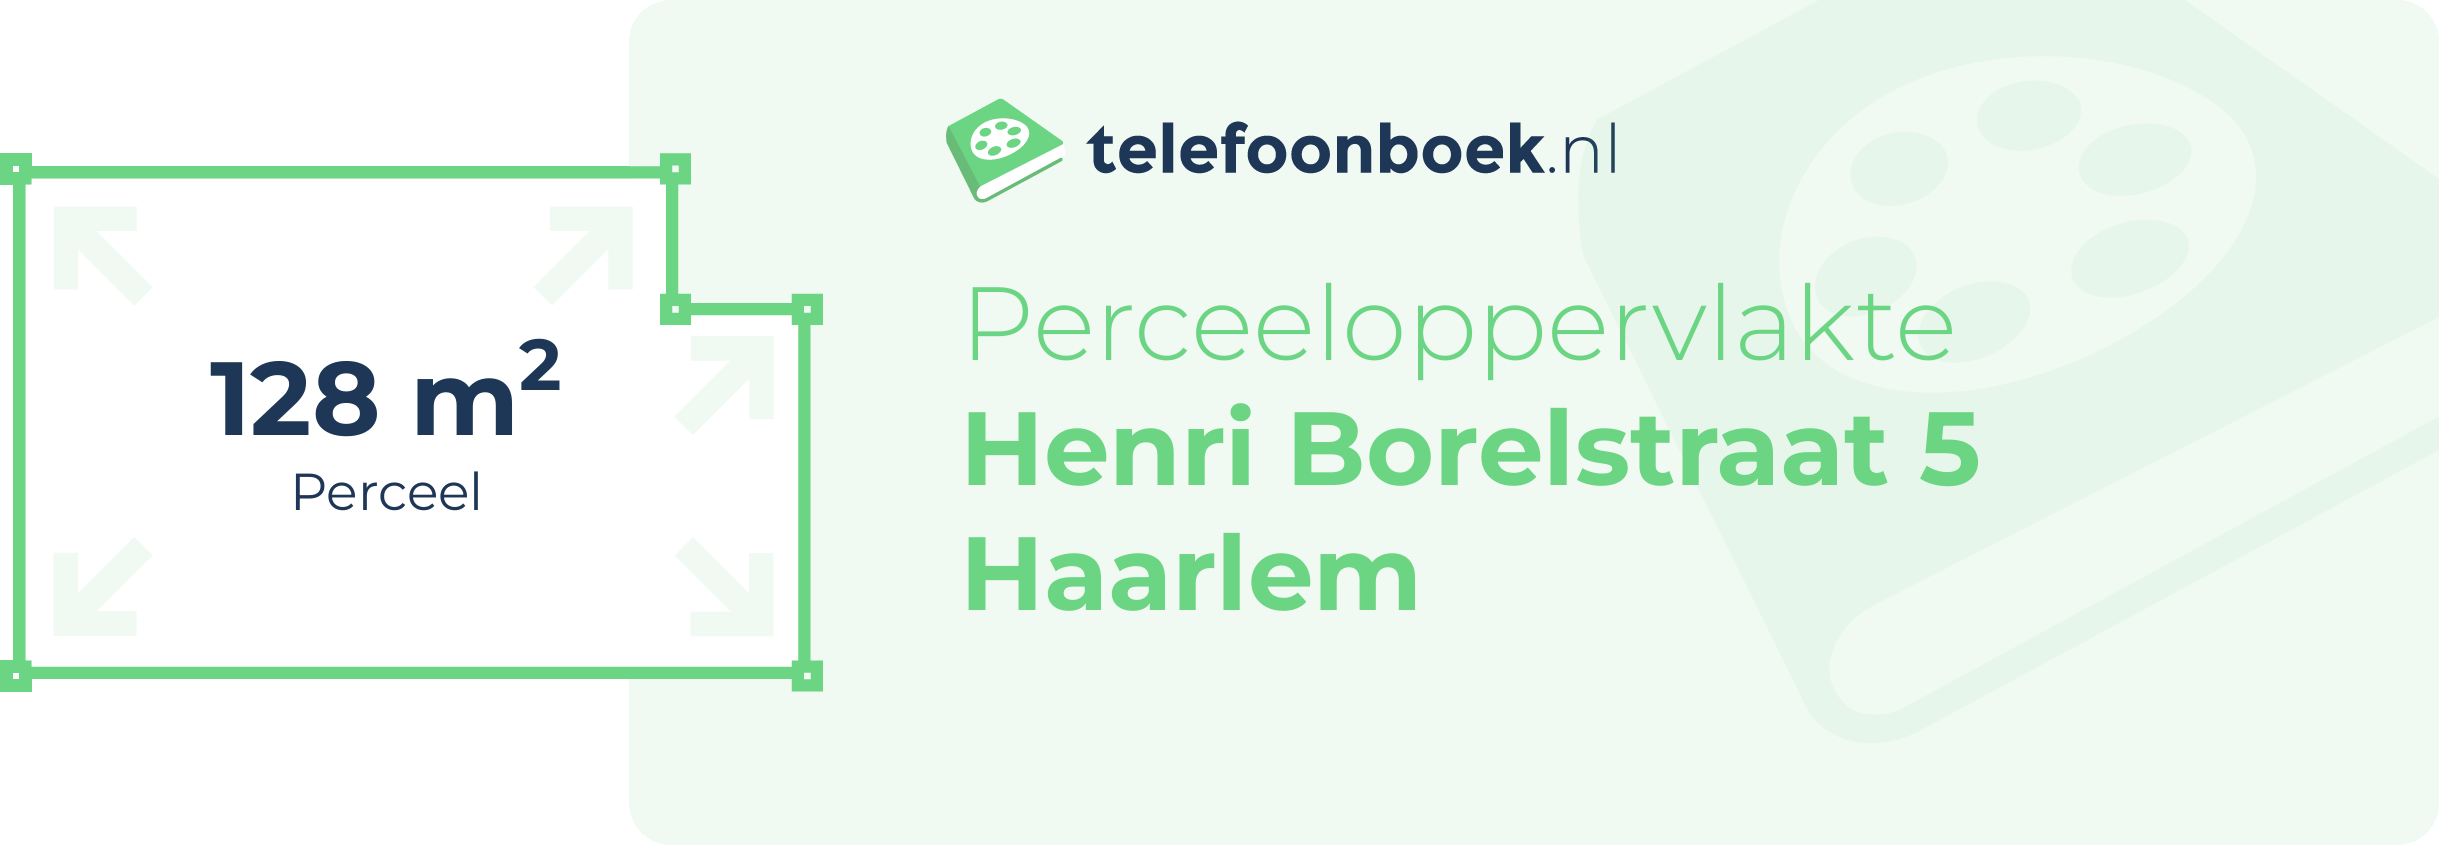 Perceeloppervlakte Henri Borelstraat 5 Haarlem